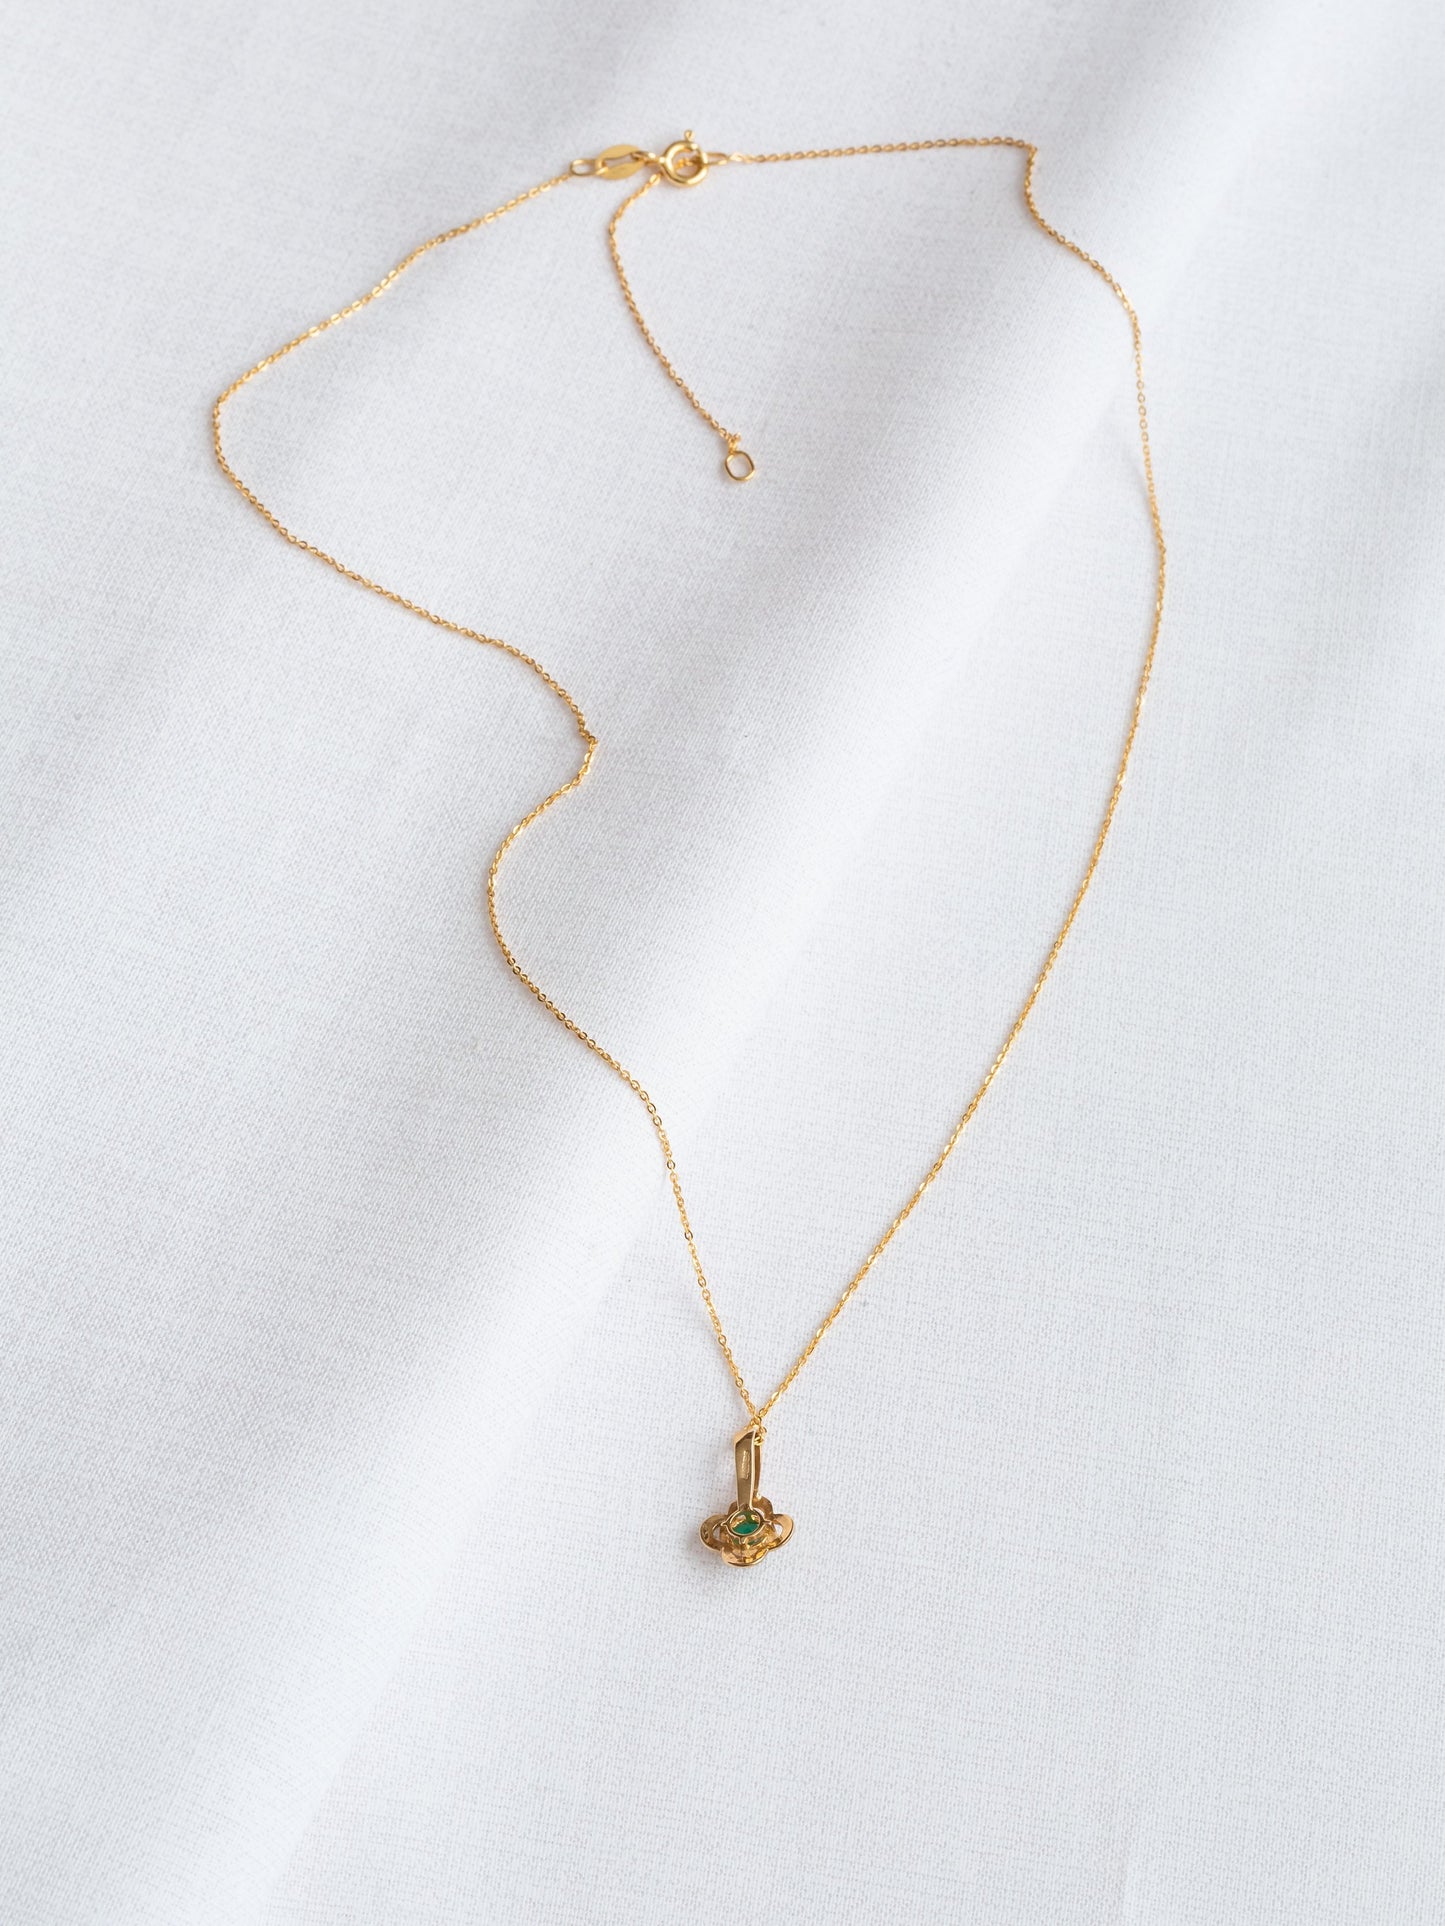 Vintage 9ct Gold Dainty Emerald Green Gemstone Necklace